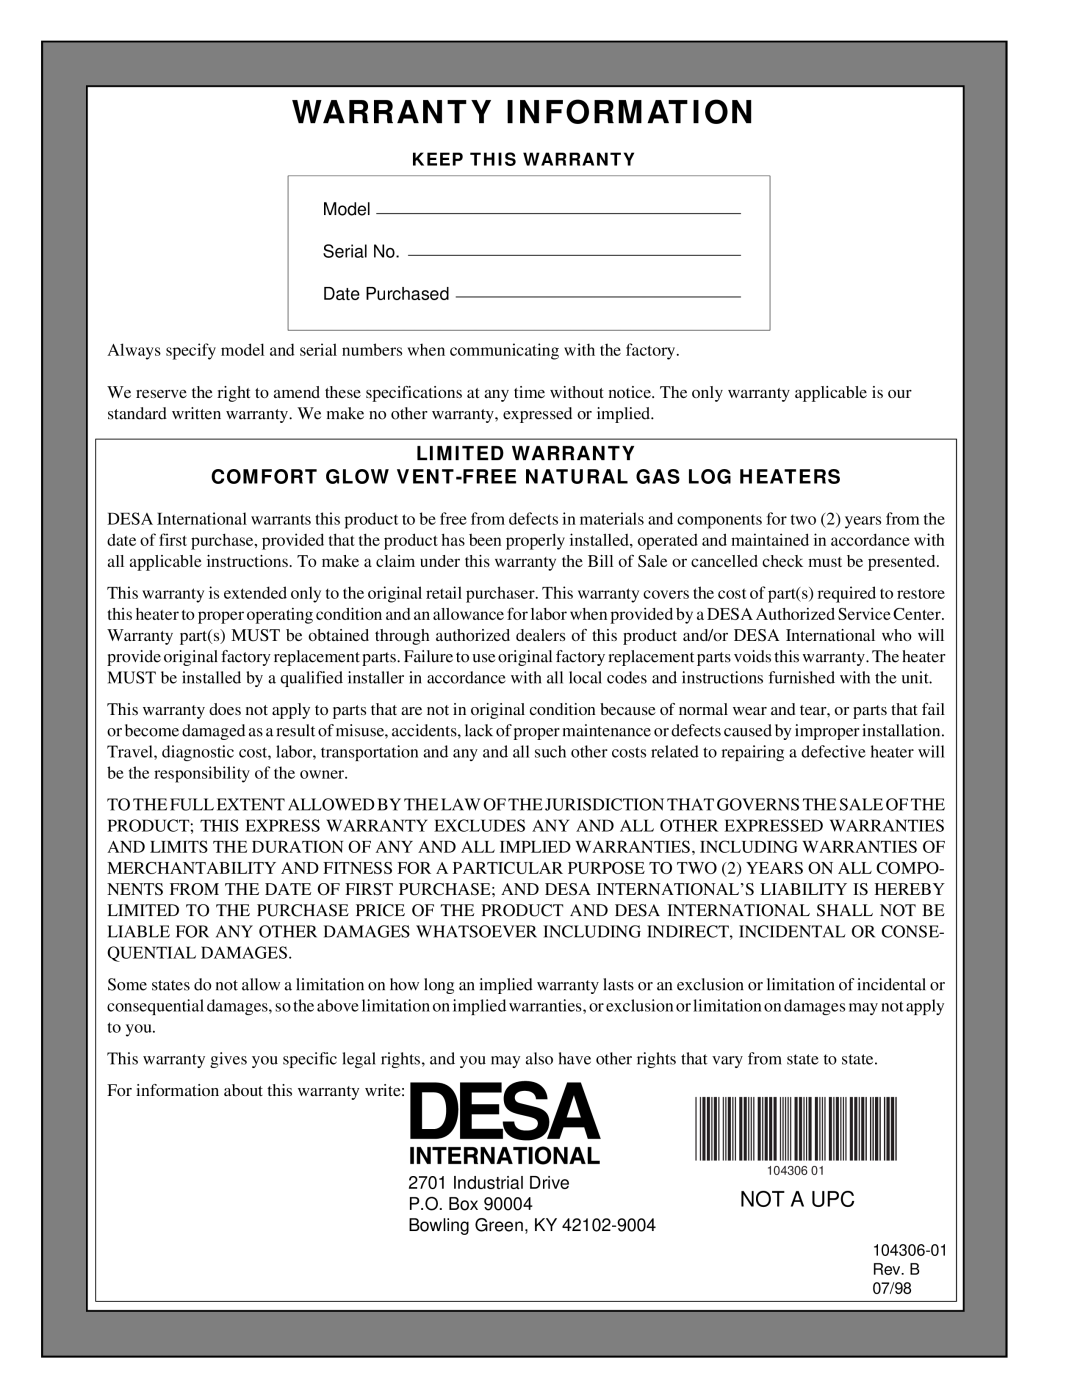 Desa CGB3930NR, CGB3924NR Warranty Information, Limited Warranty, Comfort Glow Vent-Freenatural Gas Log Heaters 